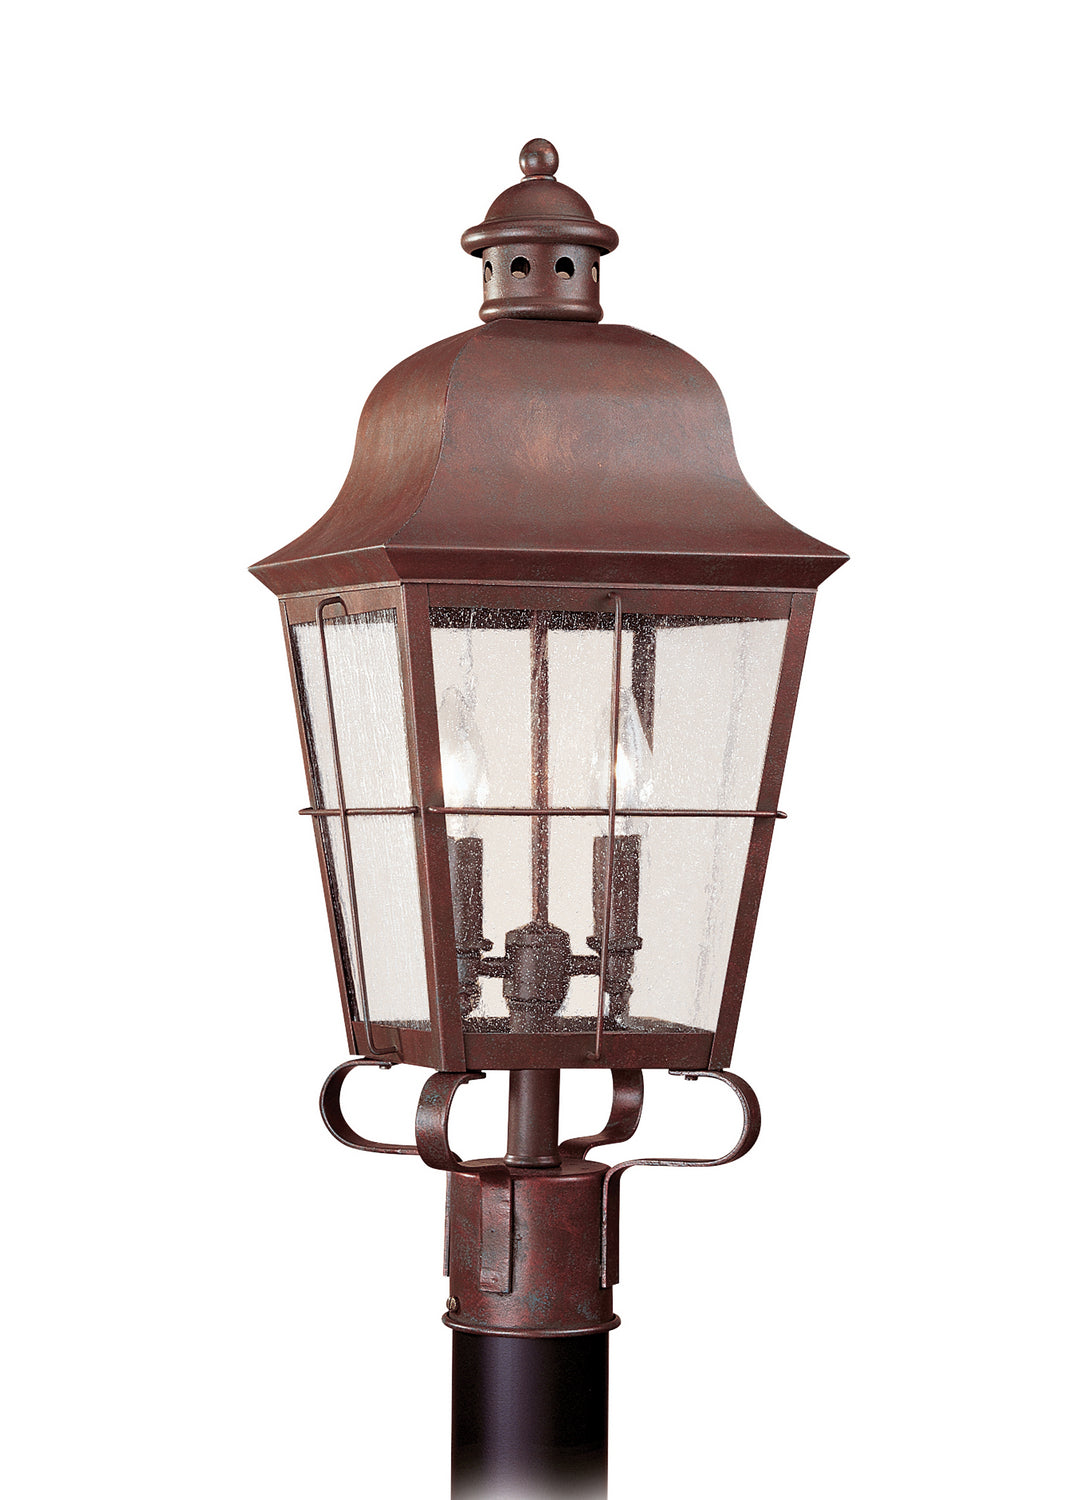 Generation Lighting Canada. - Two Light Outdoor Post Lantern - Chatham - Weathered Copper- Union Lighting Luminaires Decor